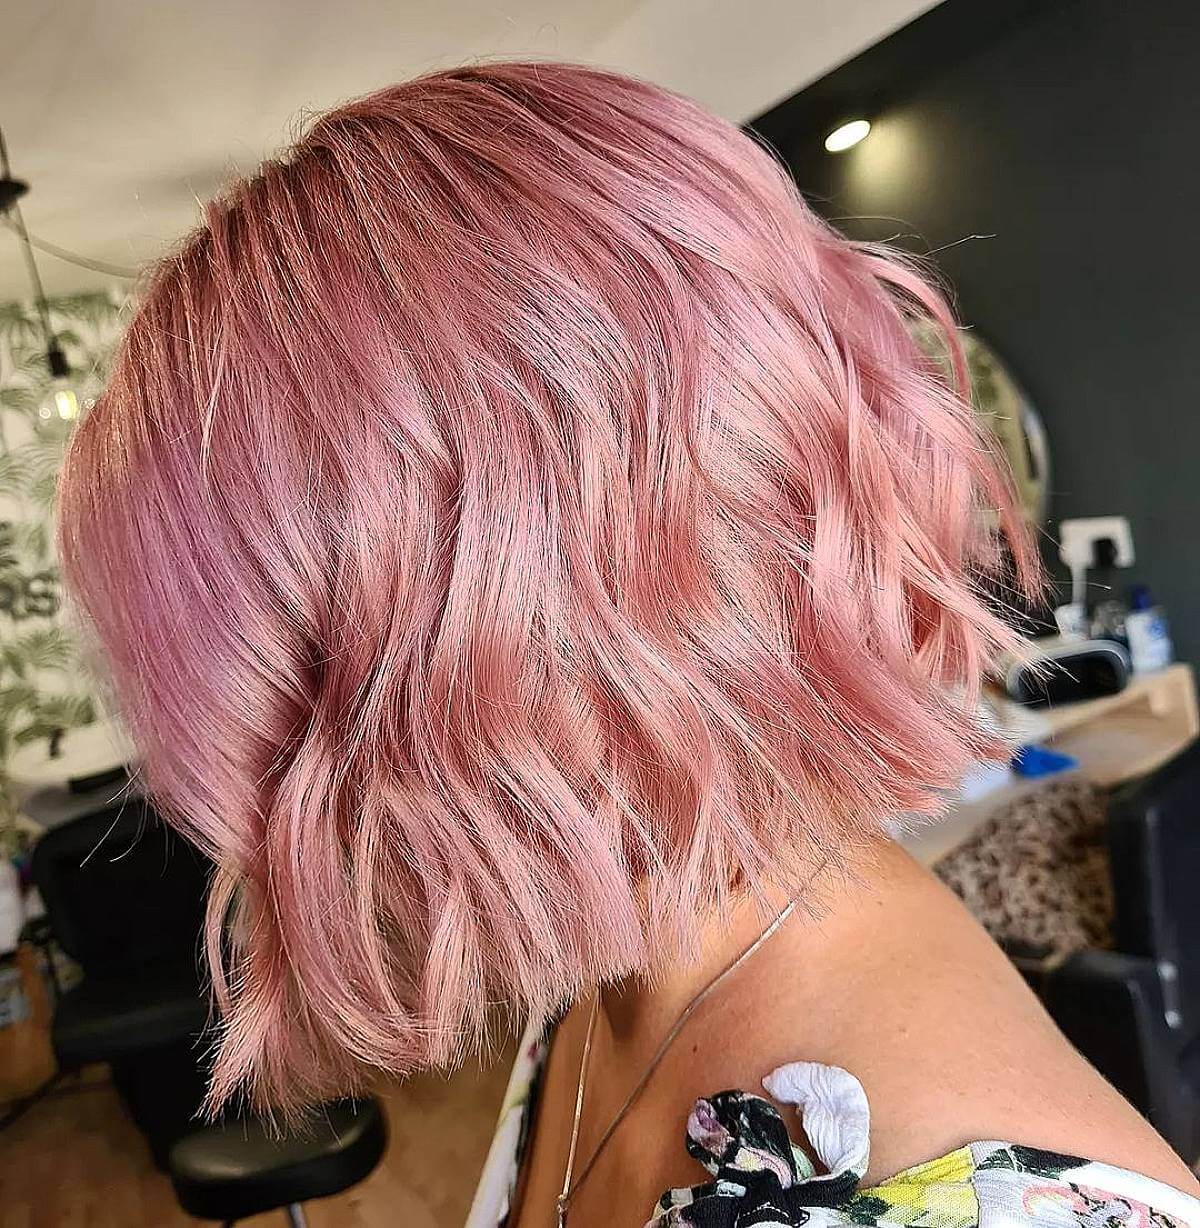 Real Hair Stories: Dyeing My Hair Pink Helped My Mental Health